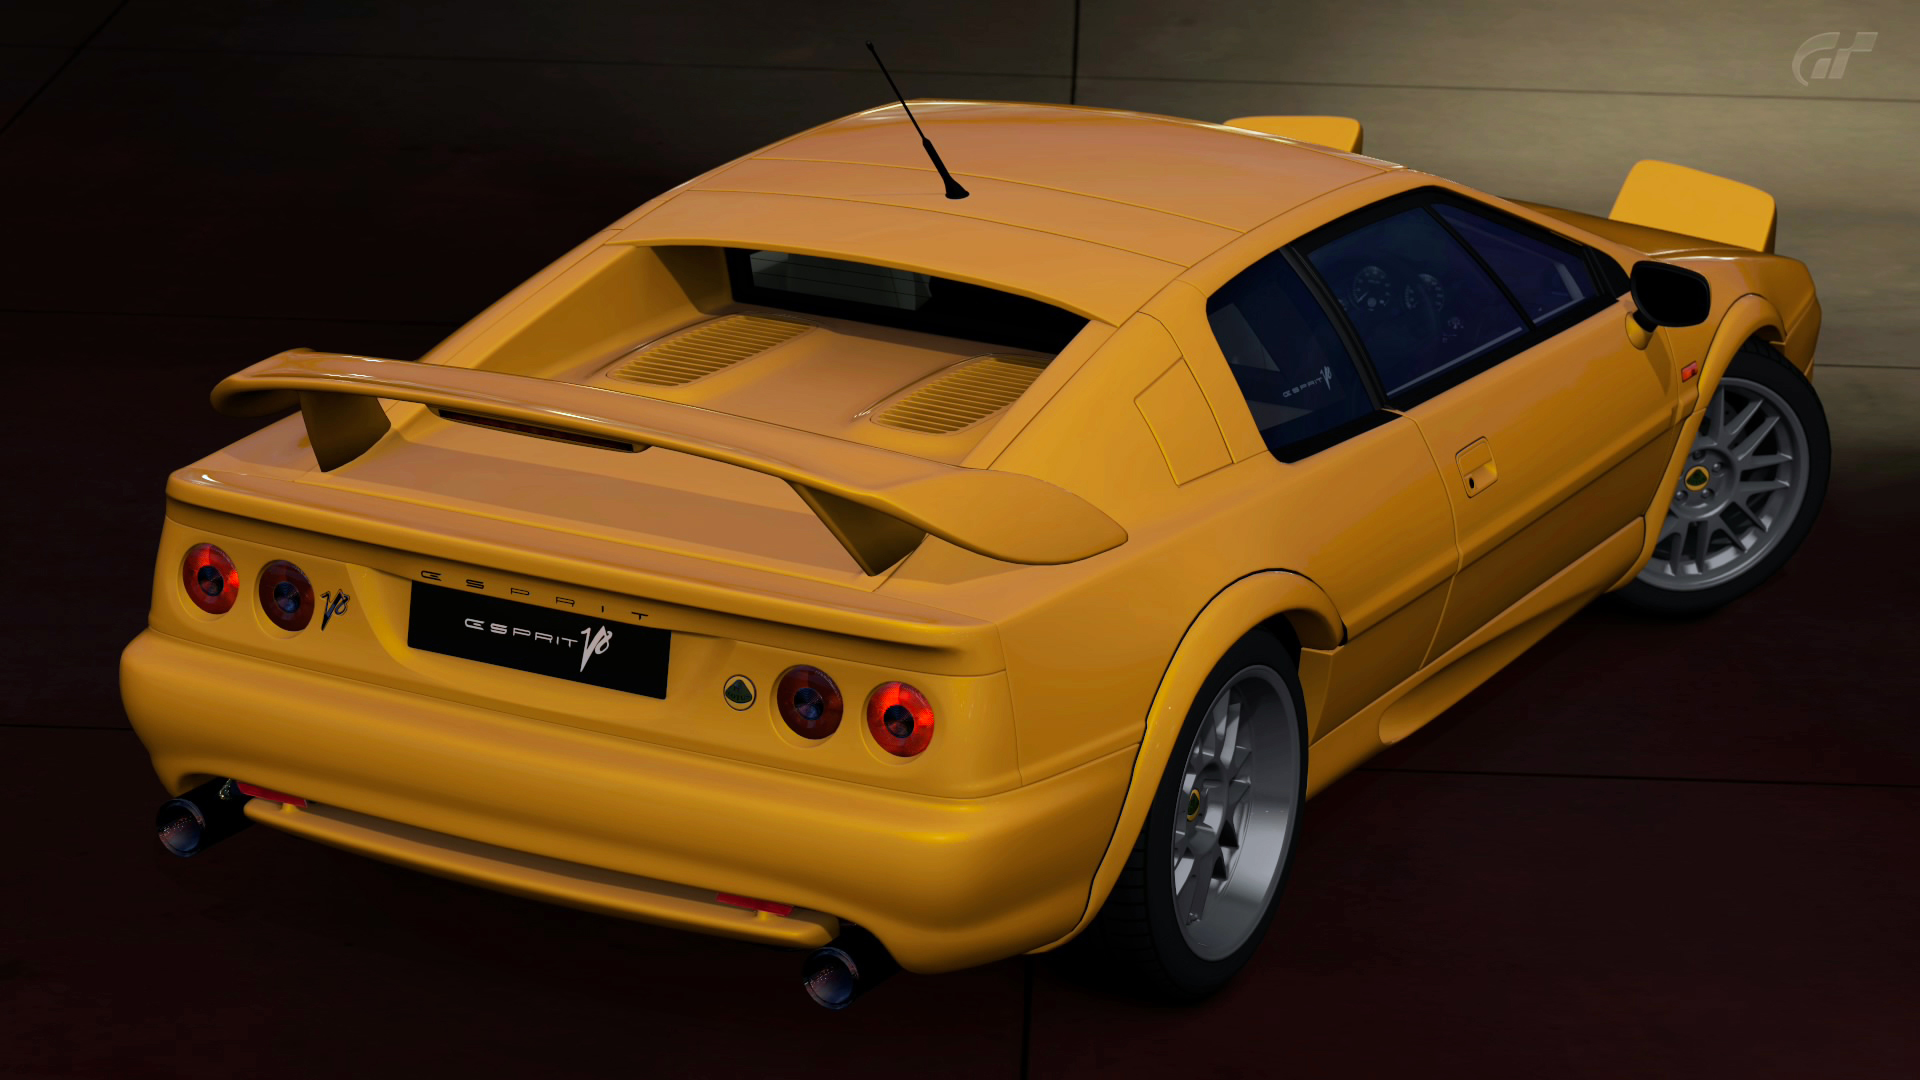 2002 Lotus Esprit V8 Gran Turismo 5 By Vertualissimo On Deviantart Images, Photos, Reviews